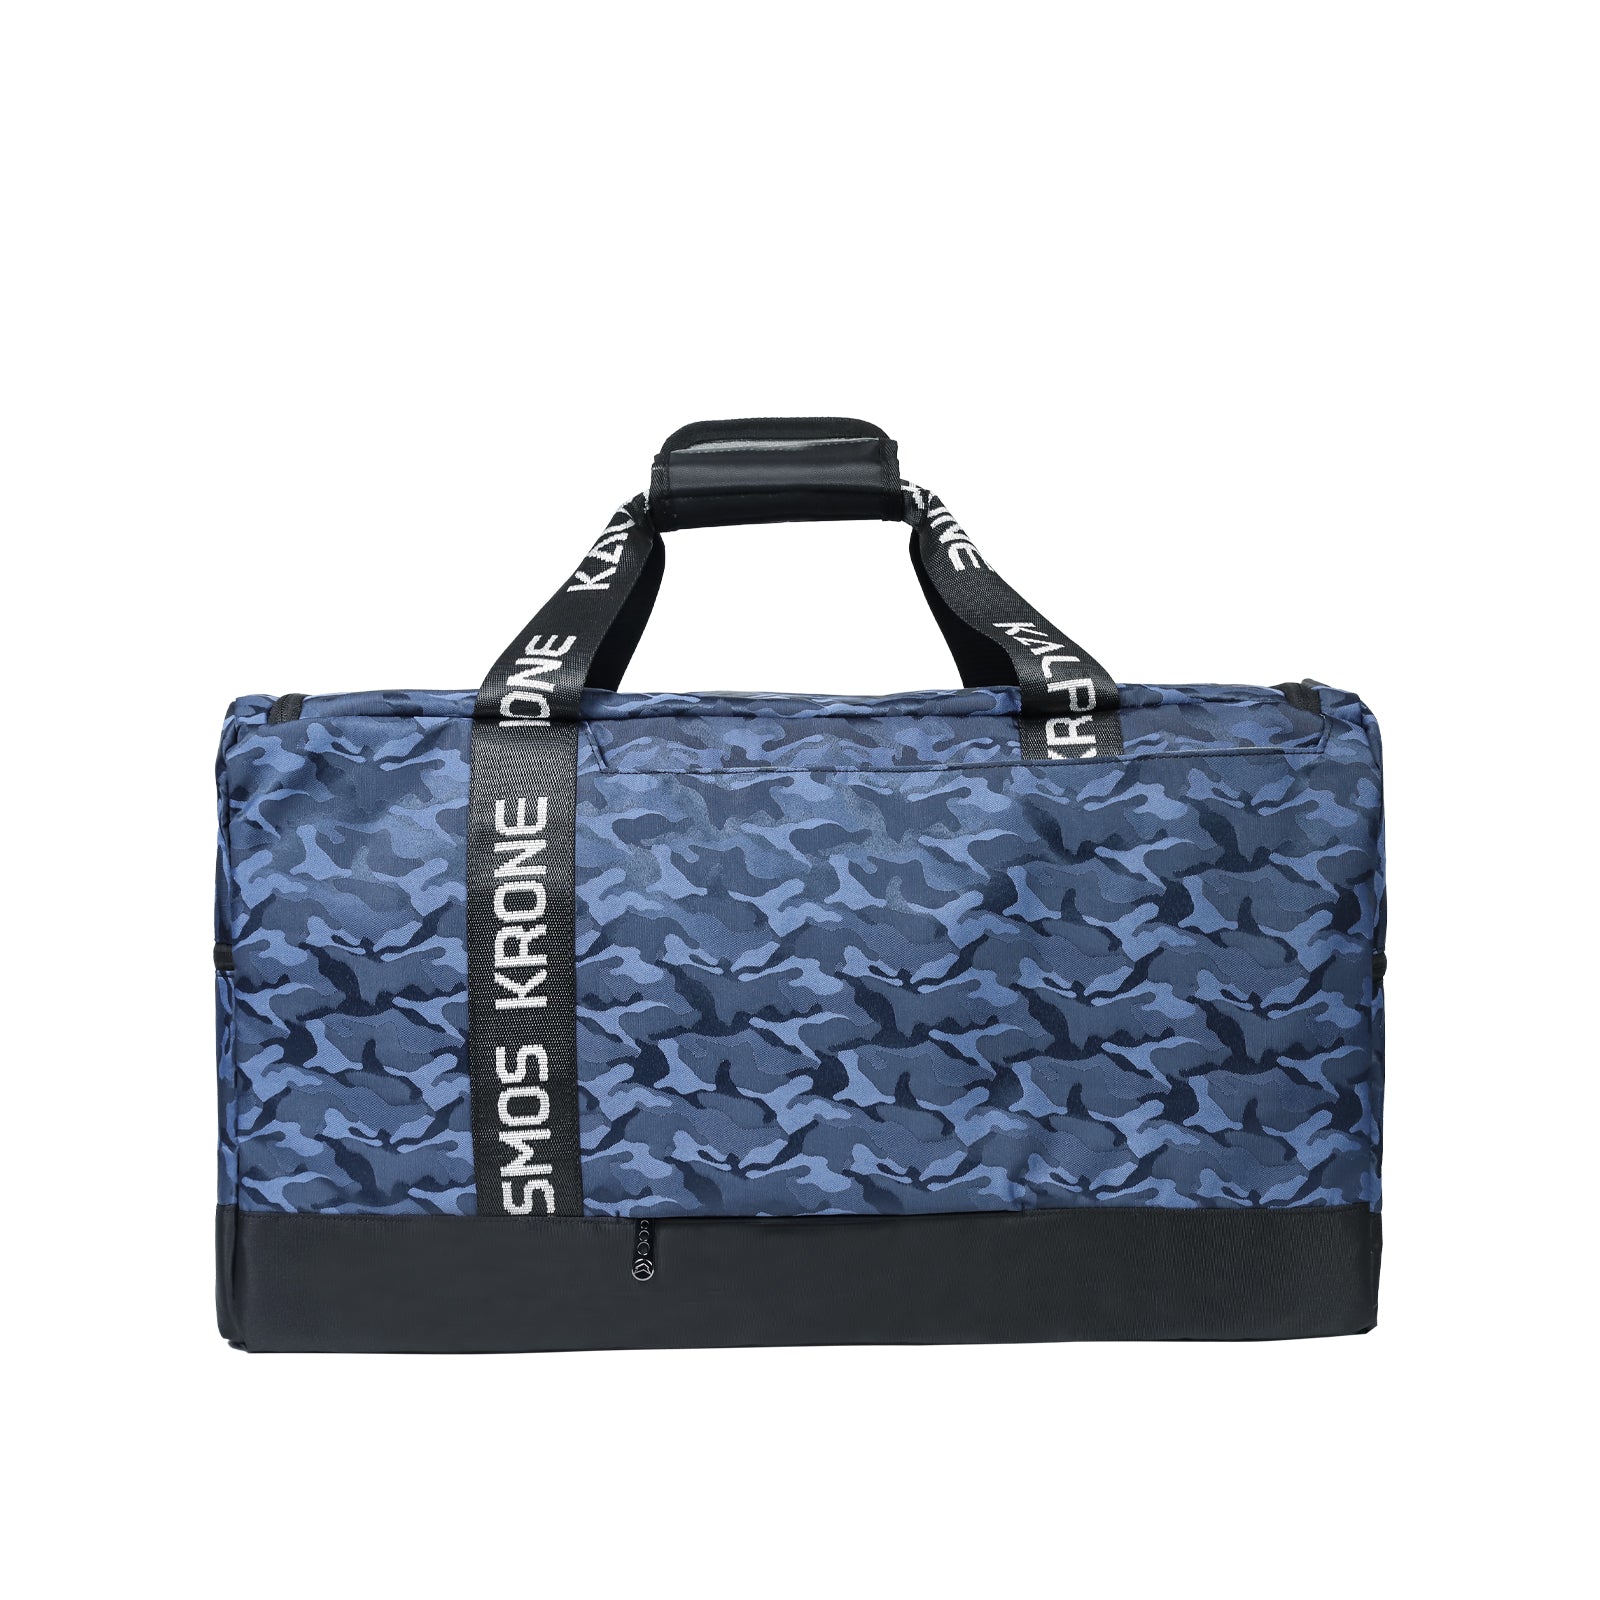 Multi-functional Travel Duffle Bag / Sports Bag / Sneaker Bag /Picnic Bag -  Blue Camo